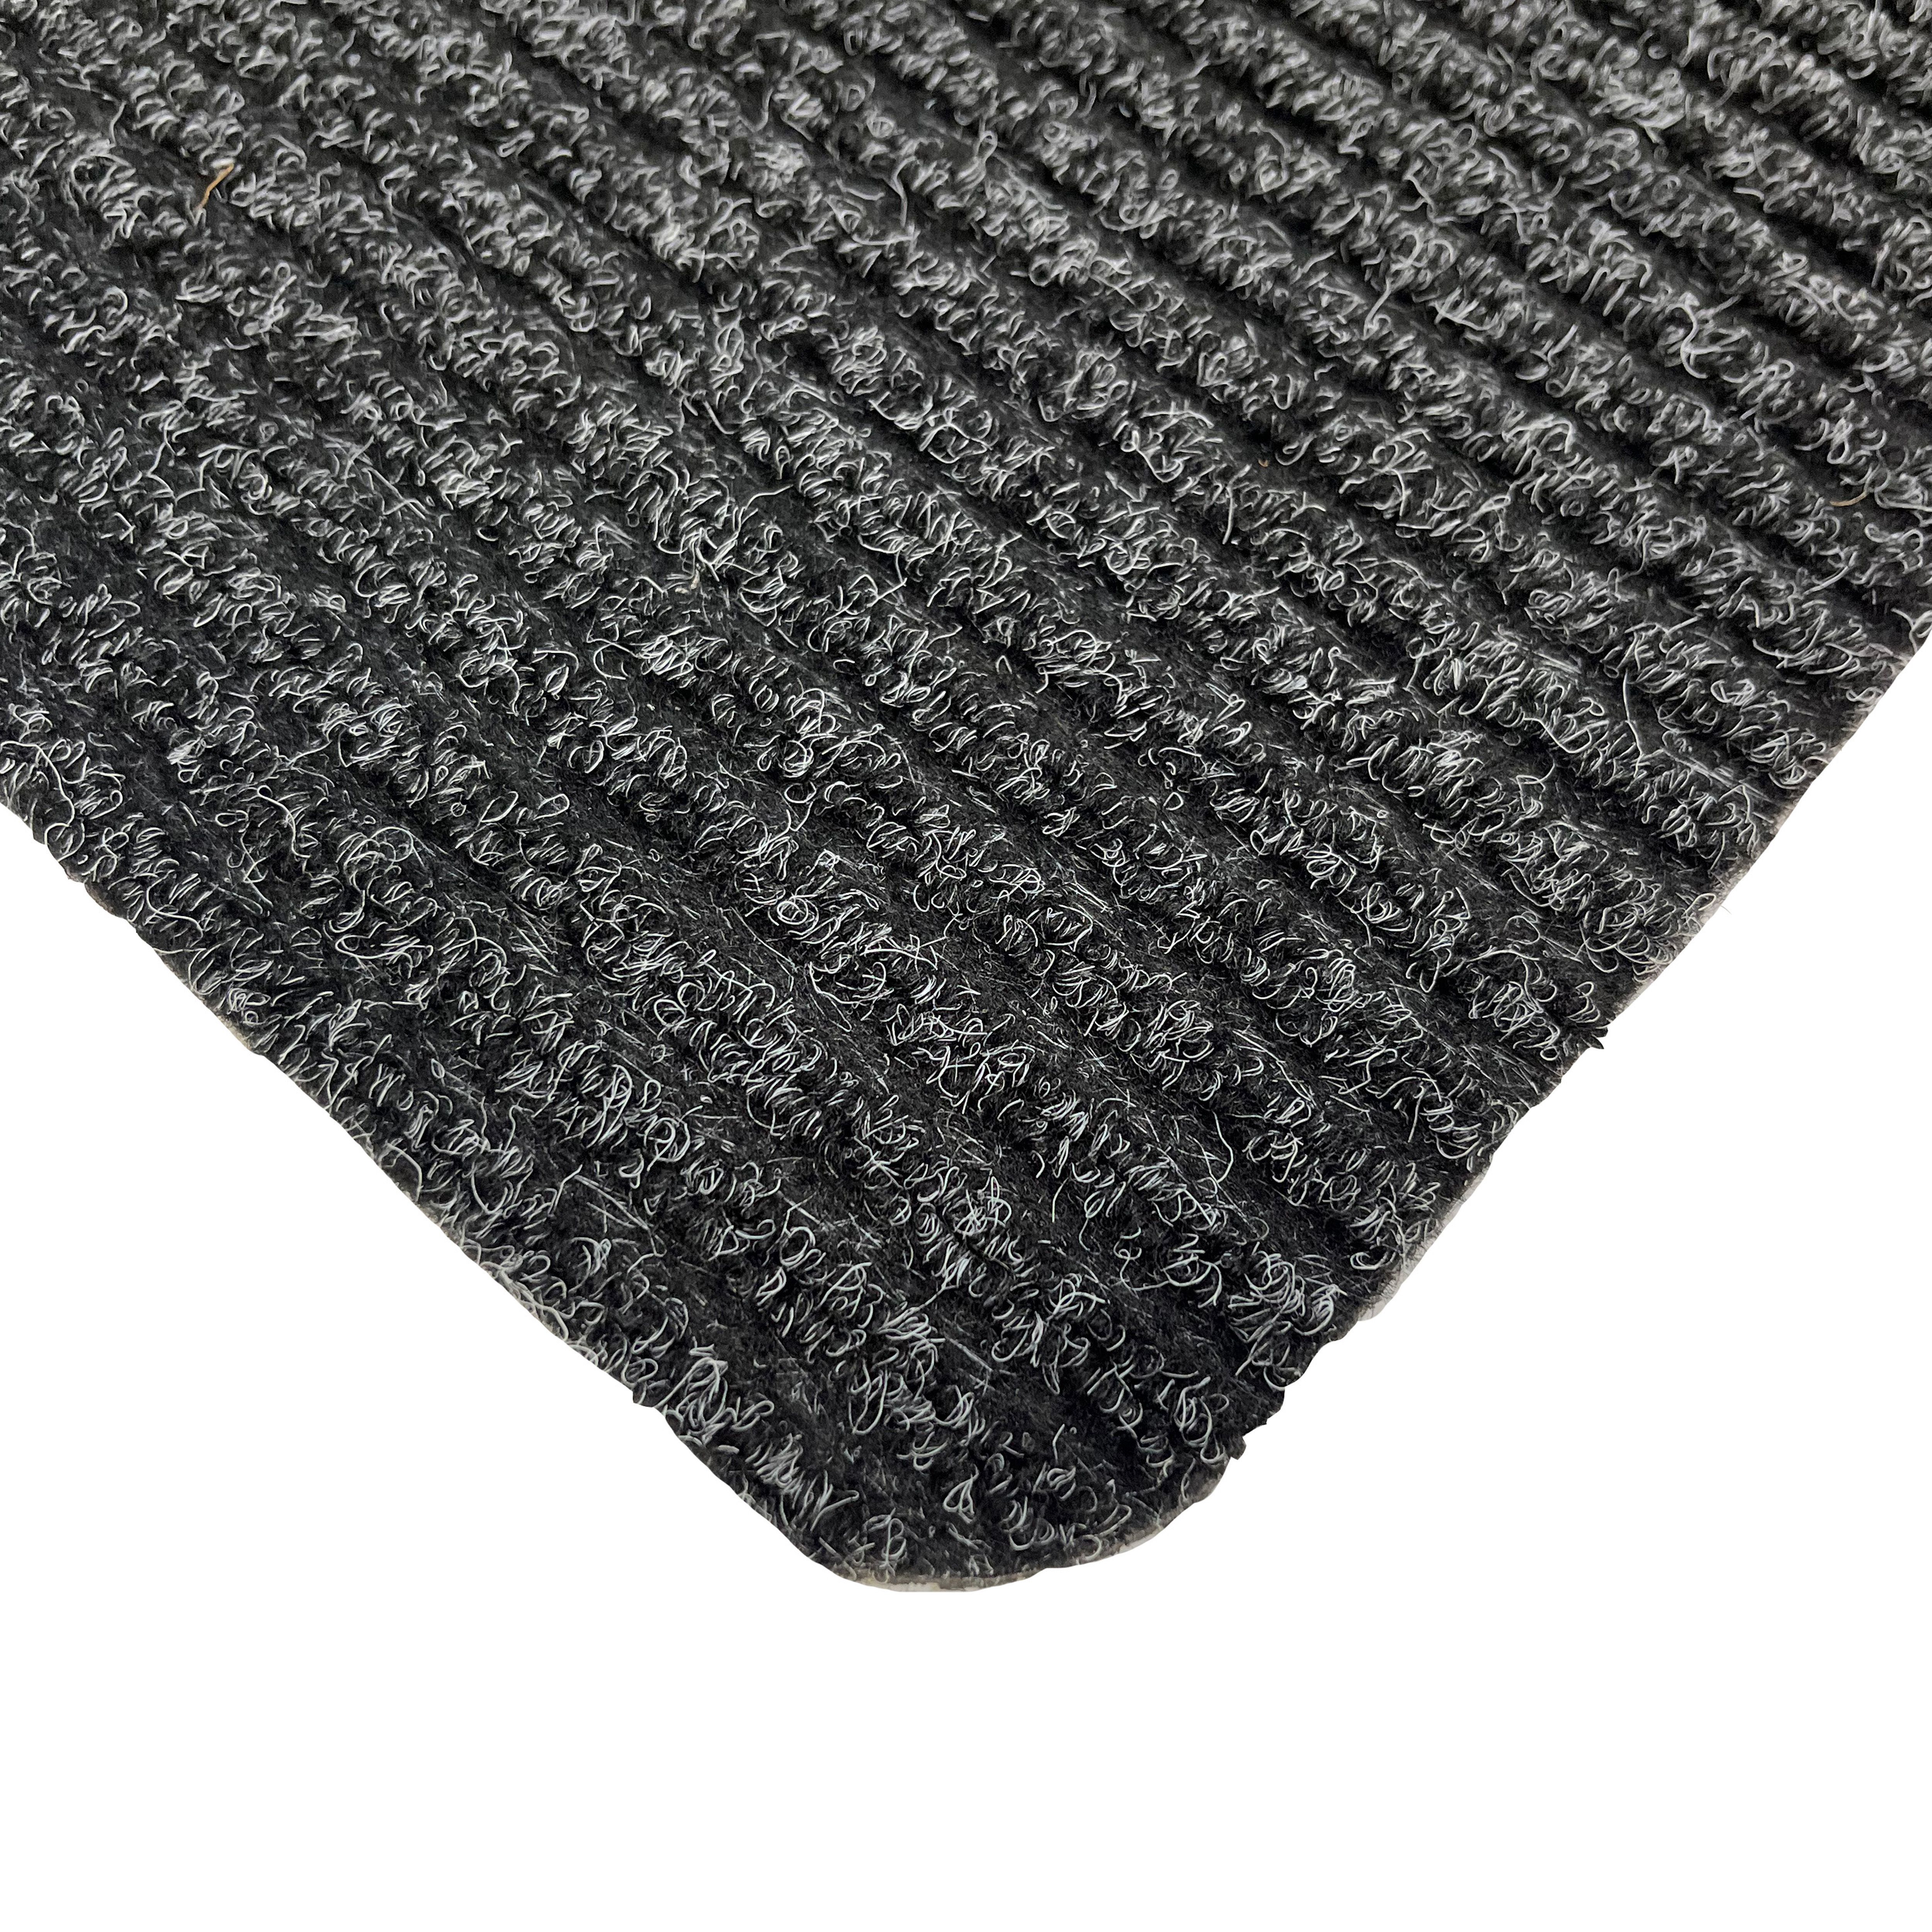 Flooring Grey Plain Scraper mat, 100cm x 60cm